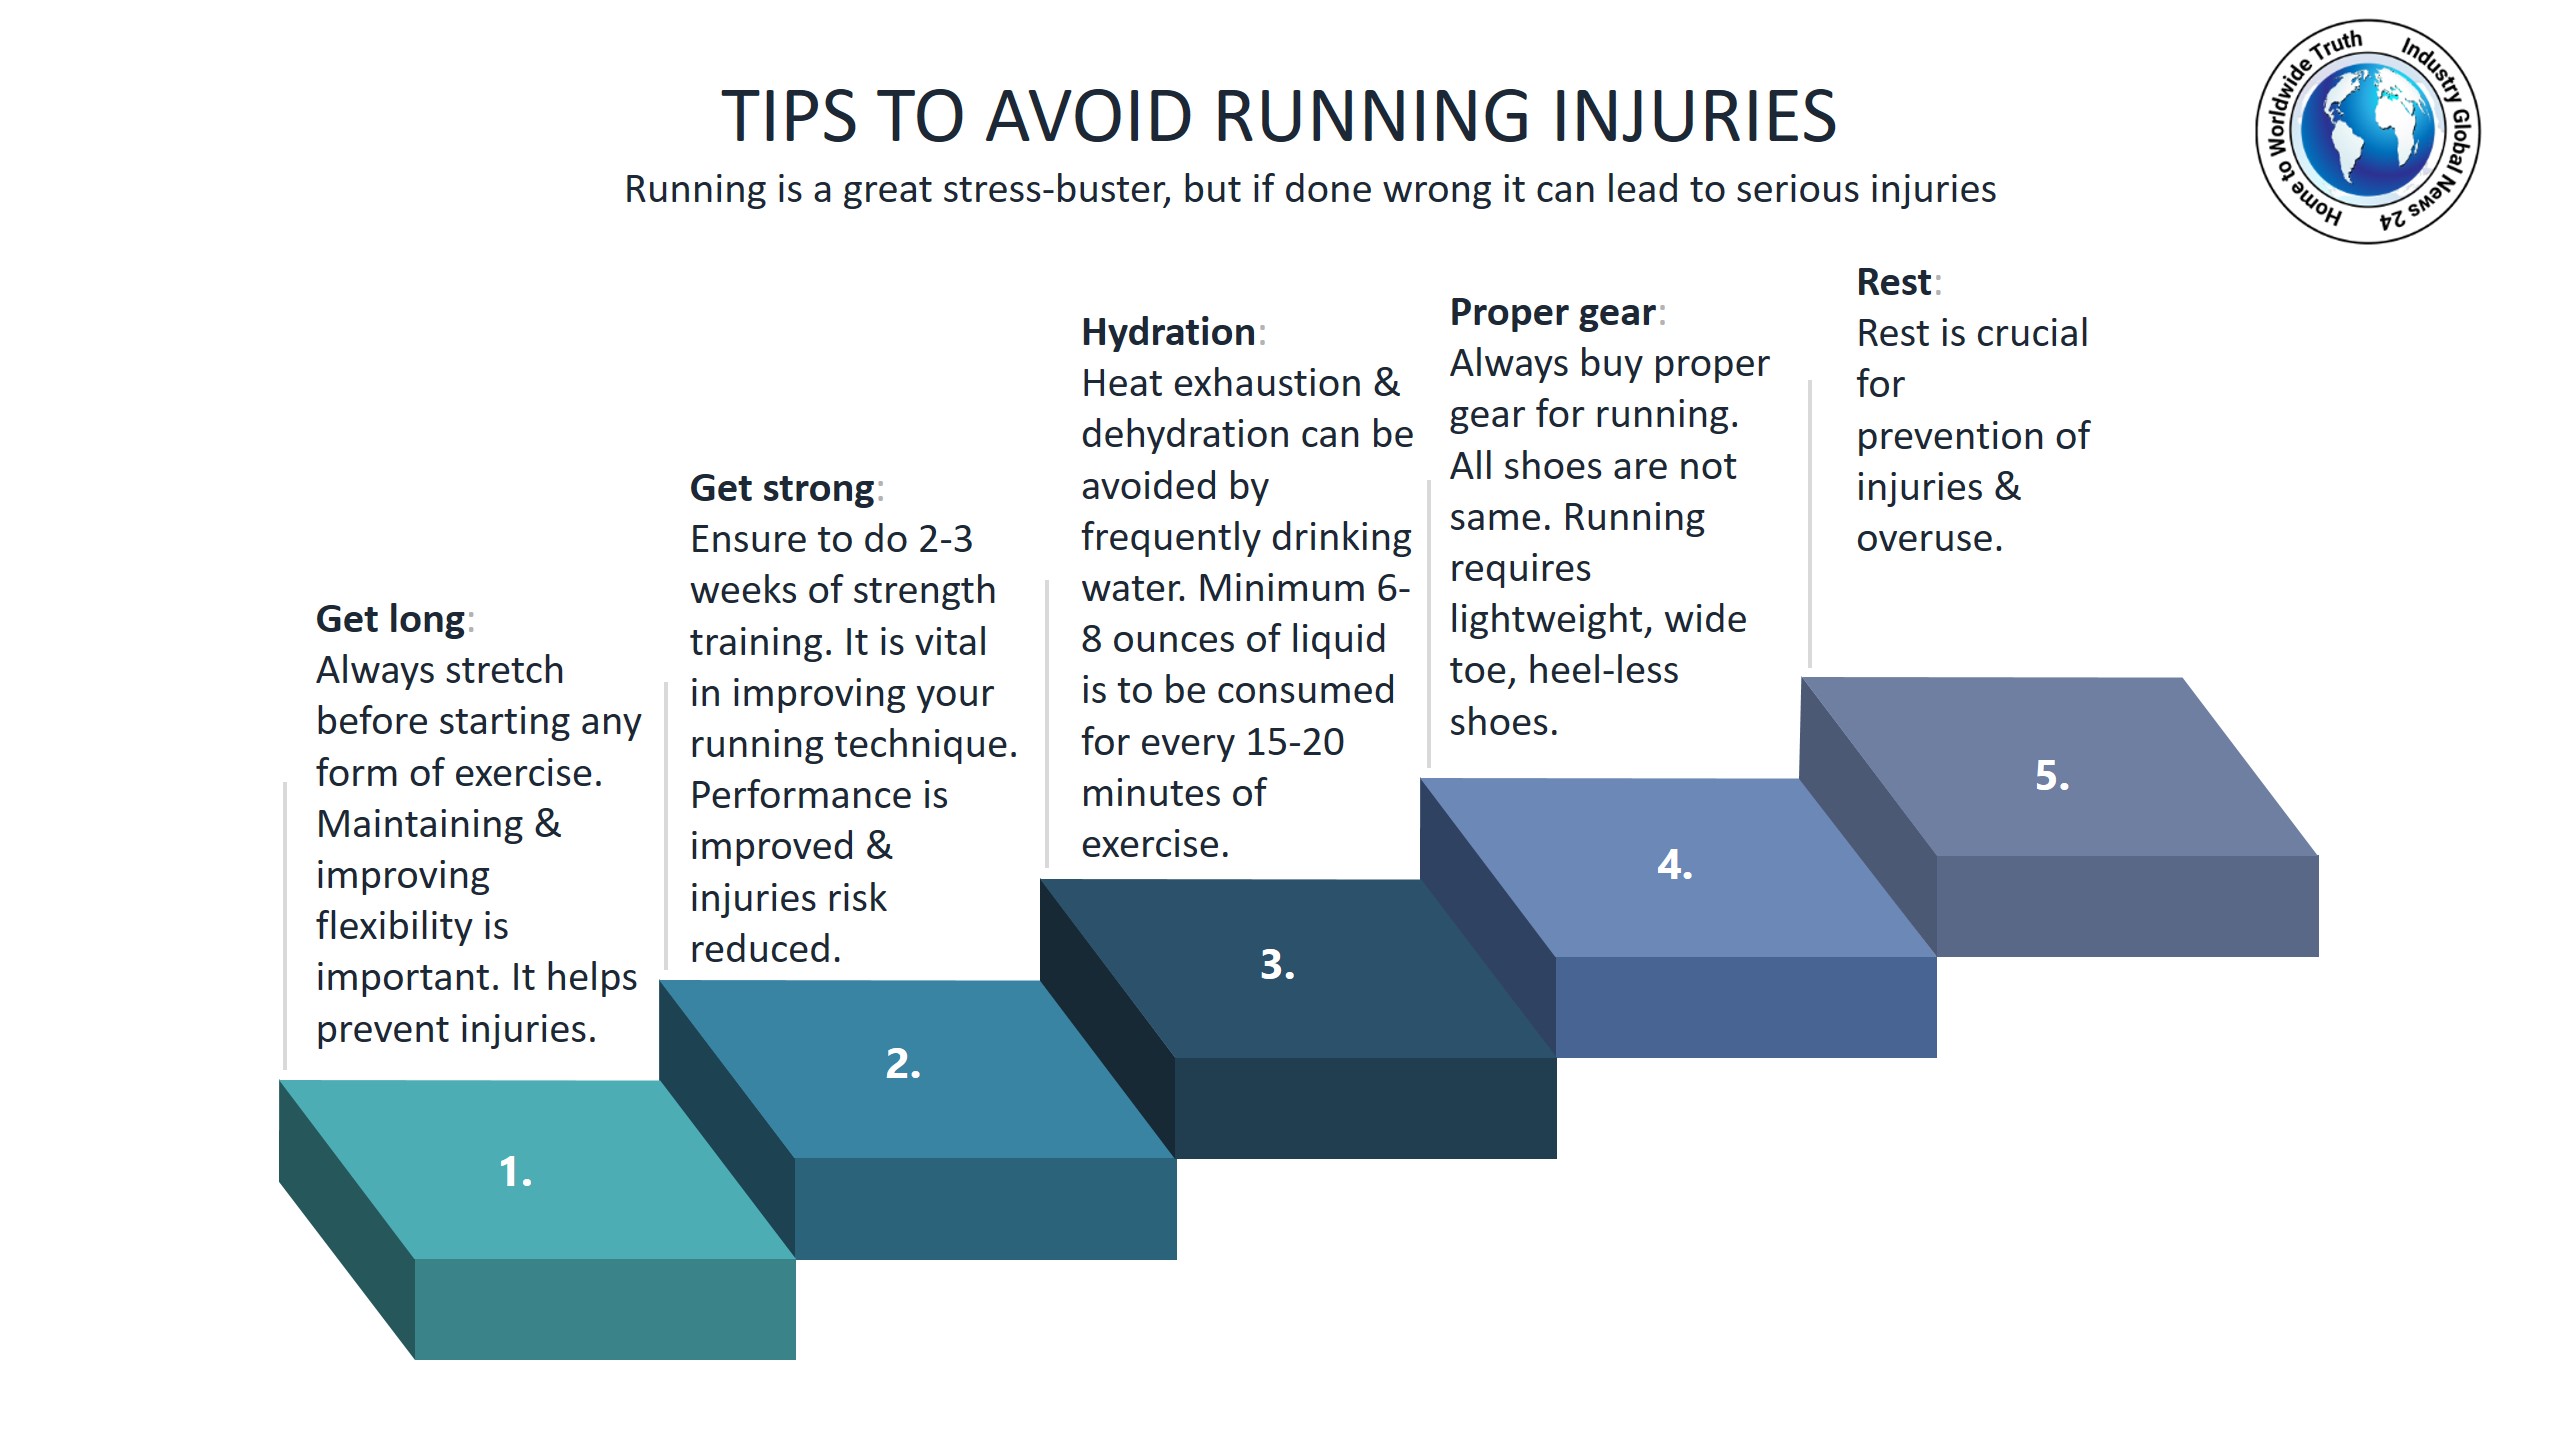 Tips to avoid running injuries